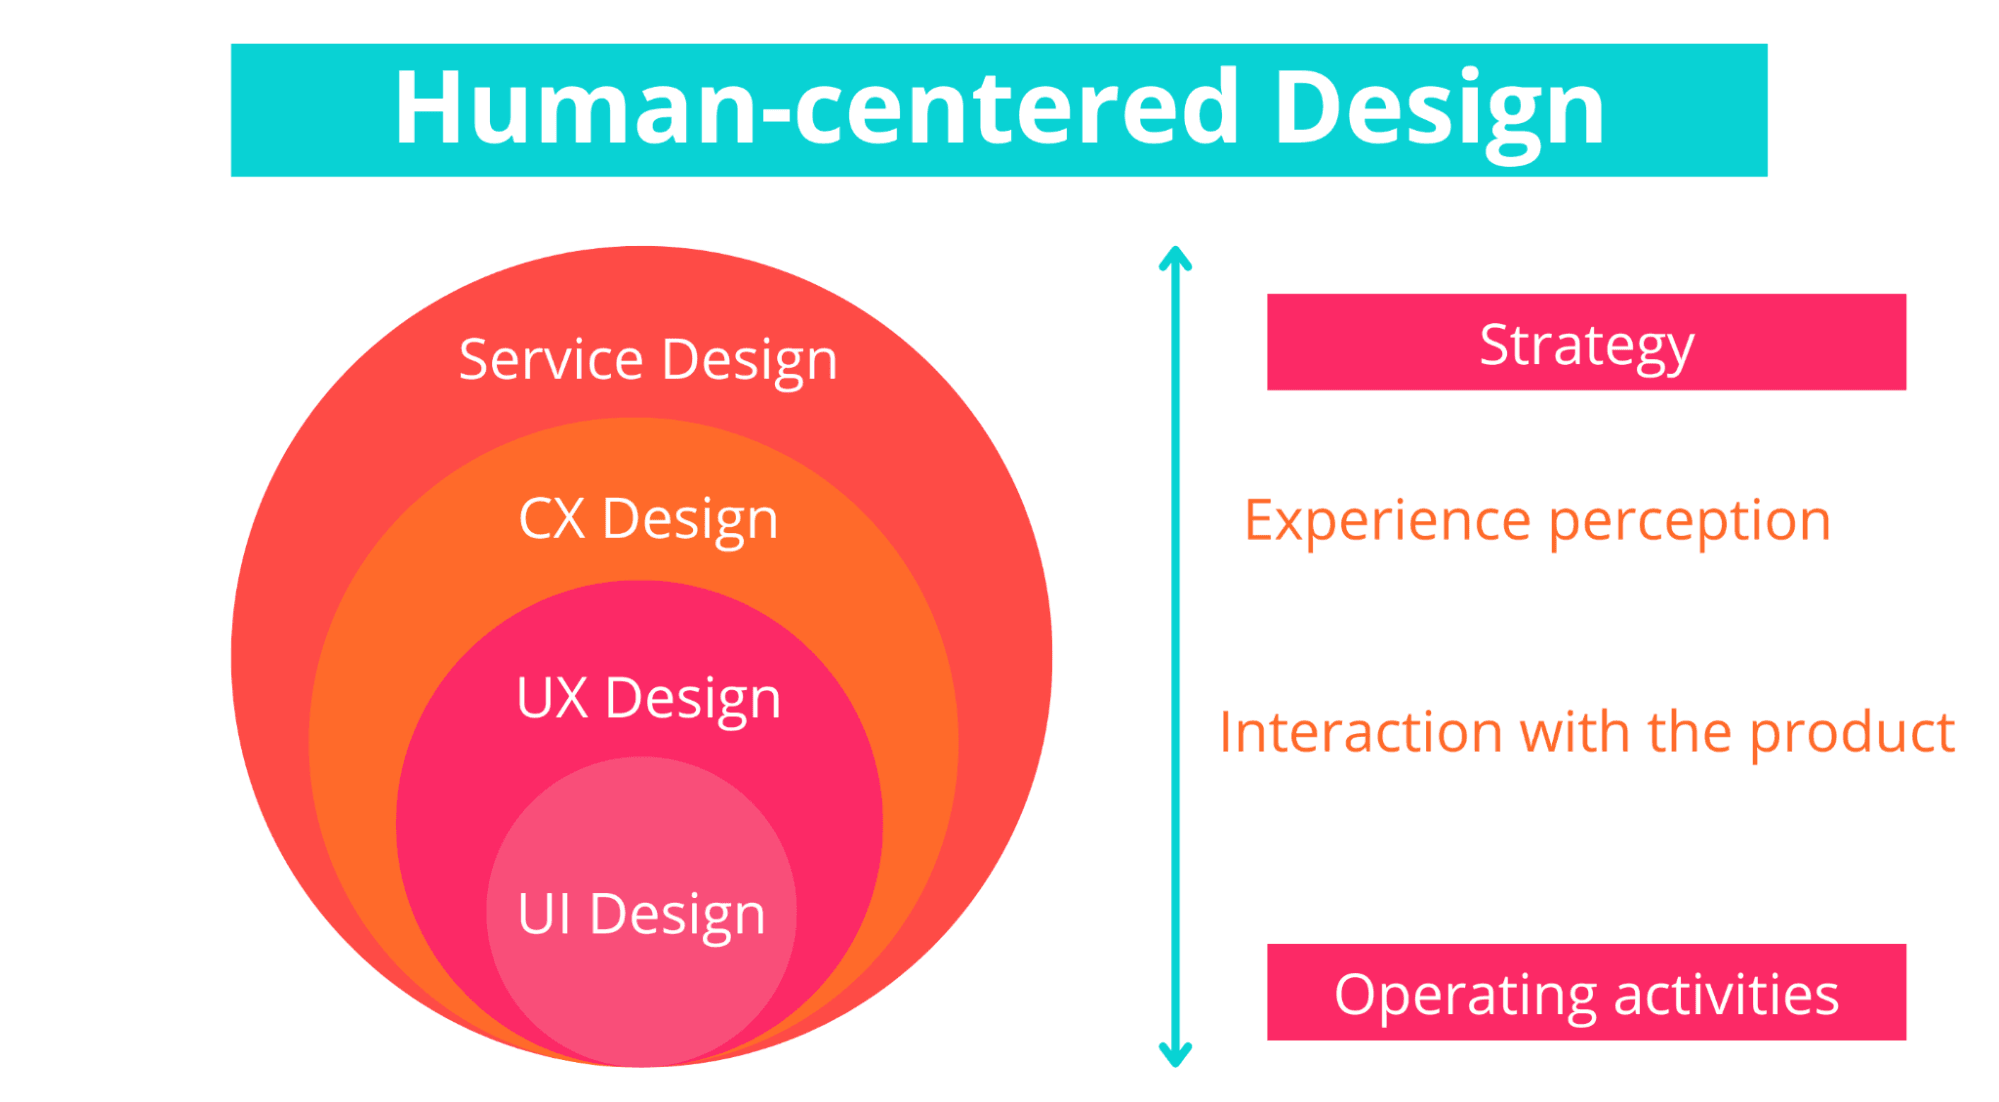 Elements of Human-centered Design